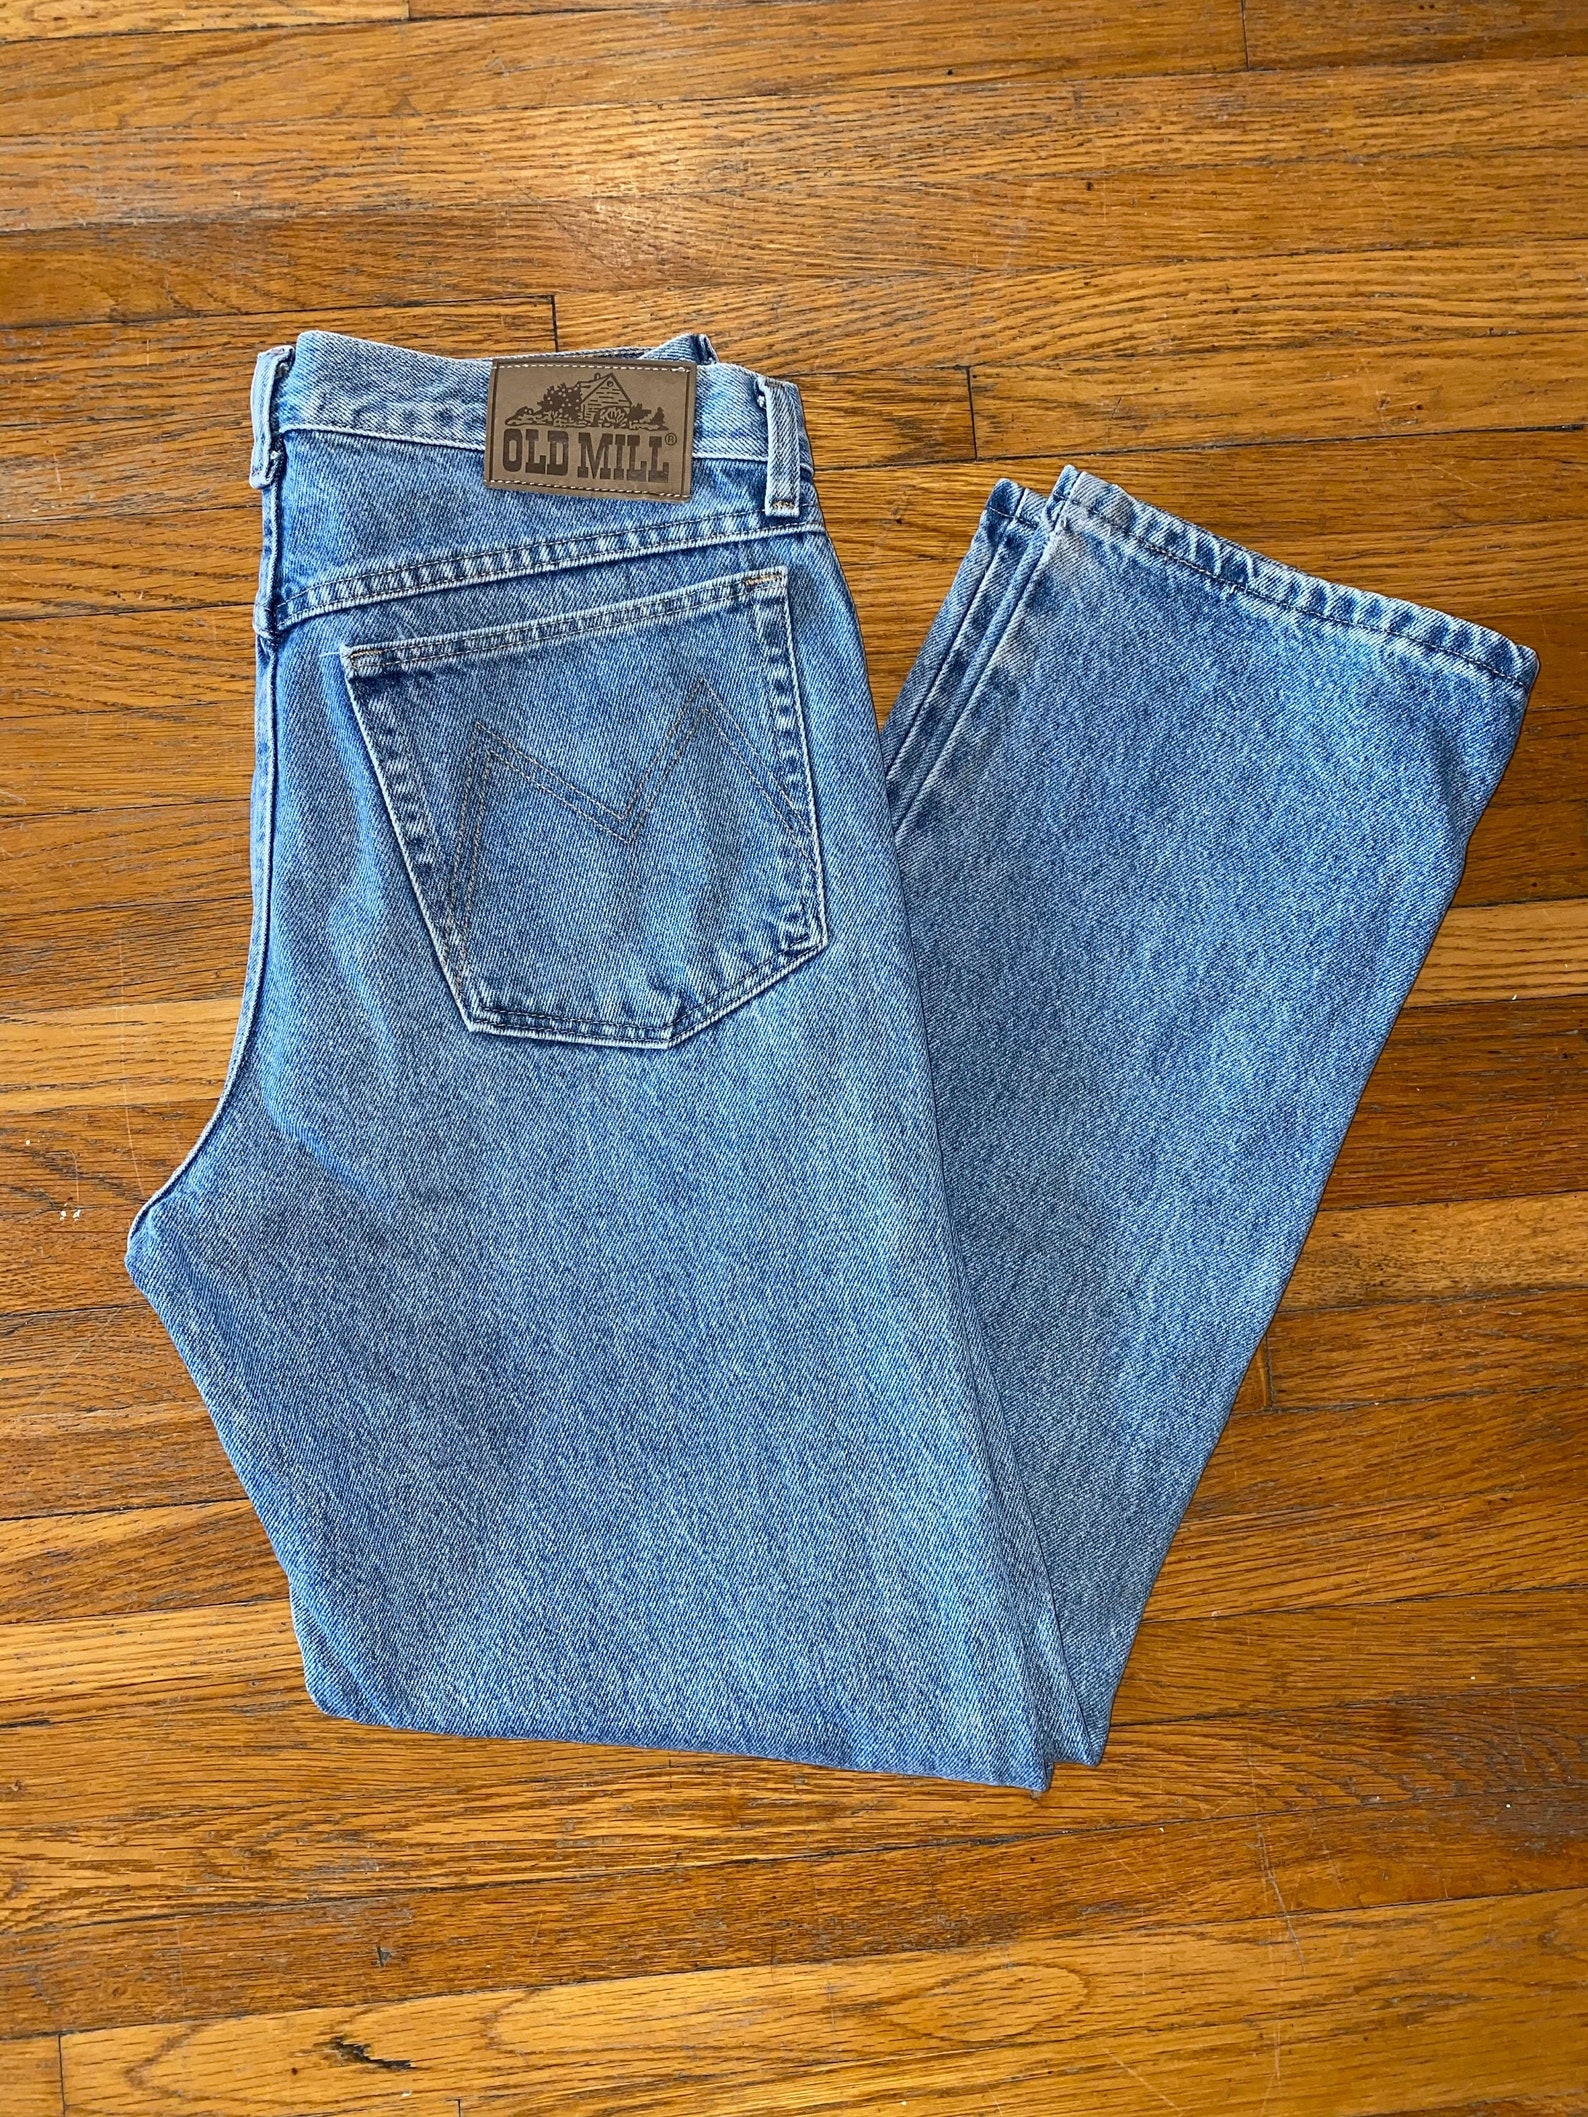 Vintage OLD MILL Denim Jeans - Etsy Denmark